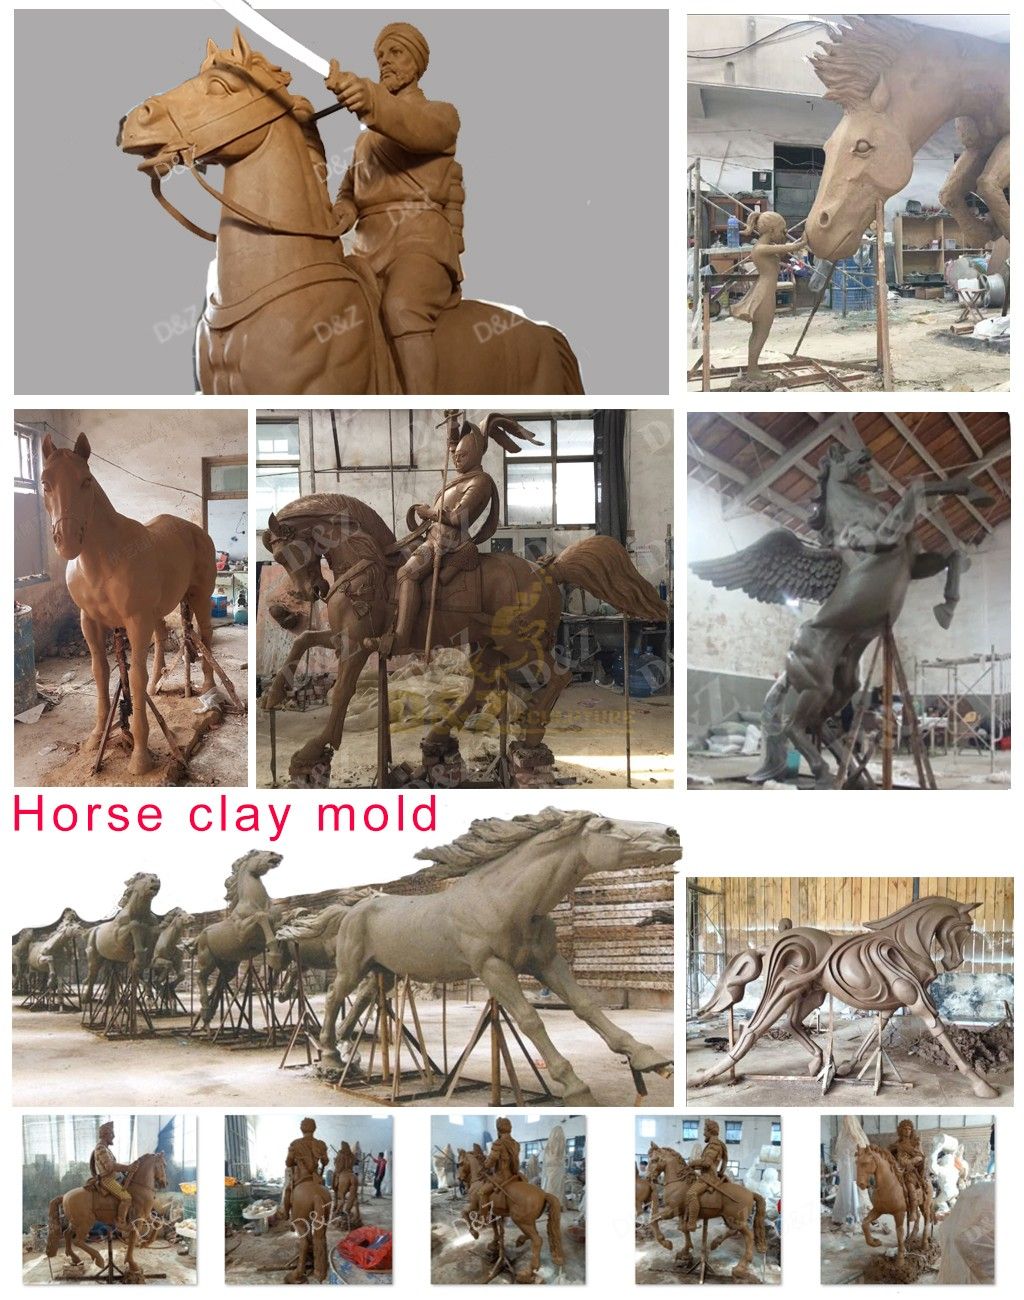 Horse statues